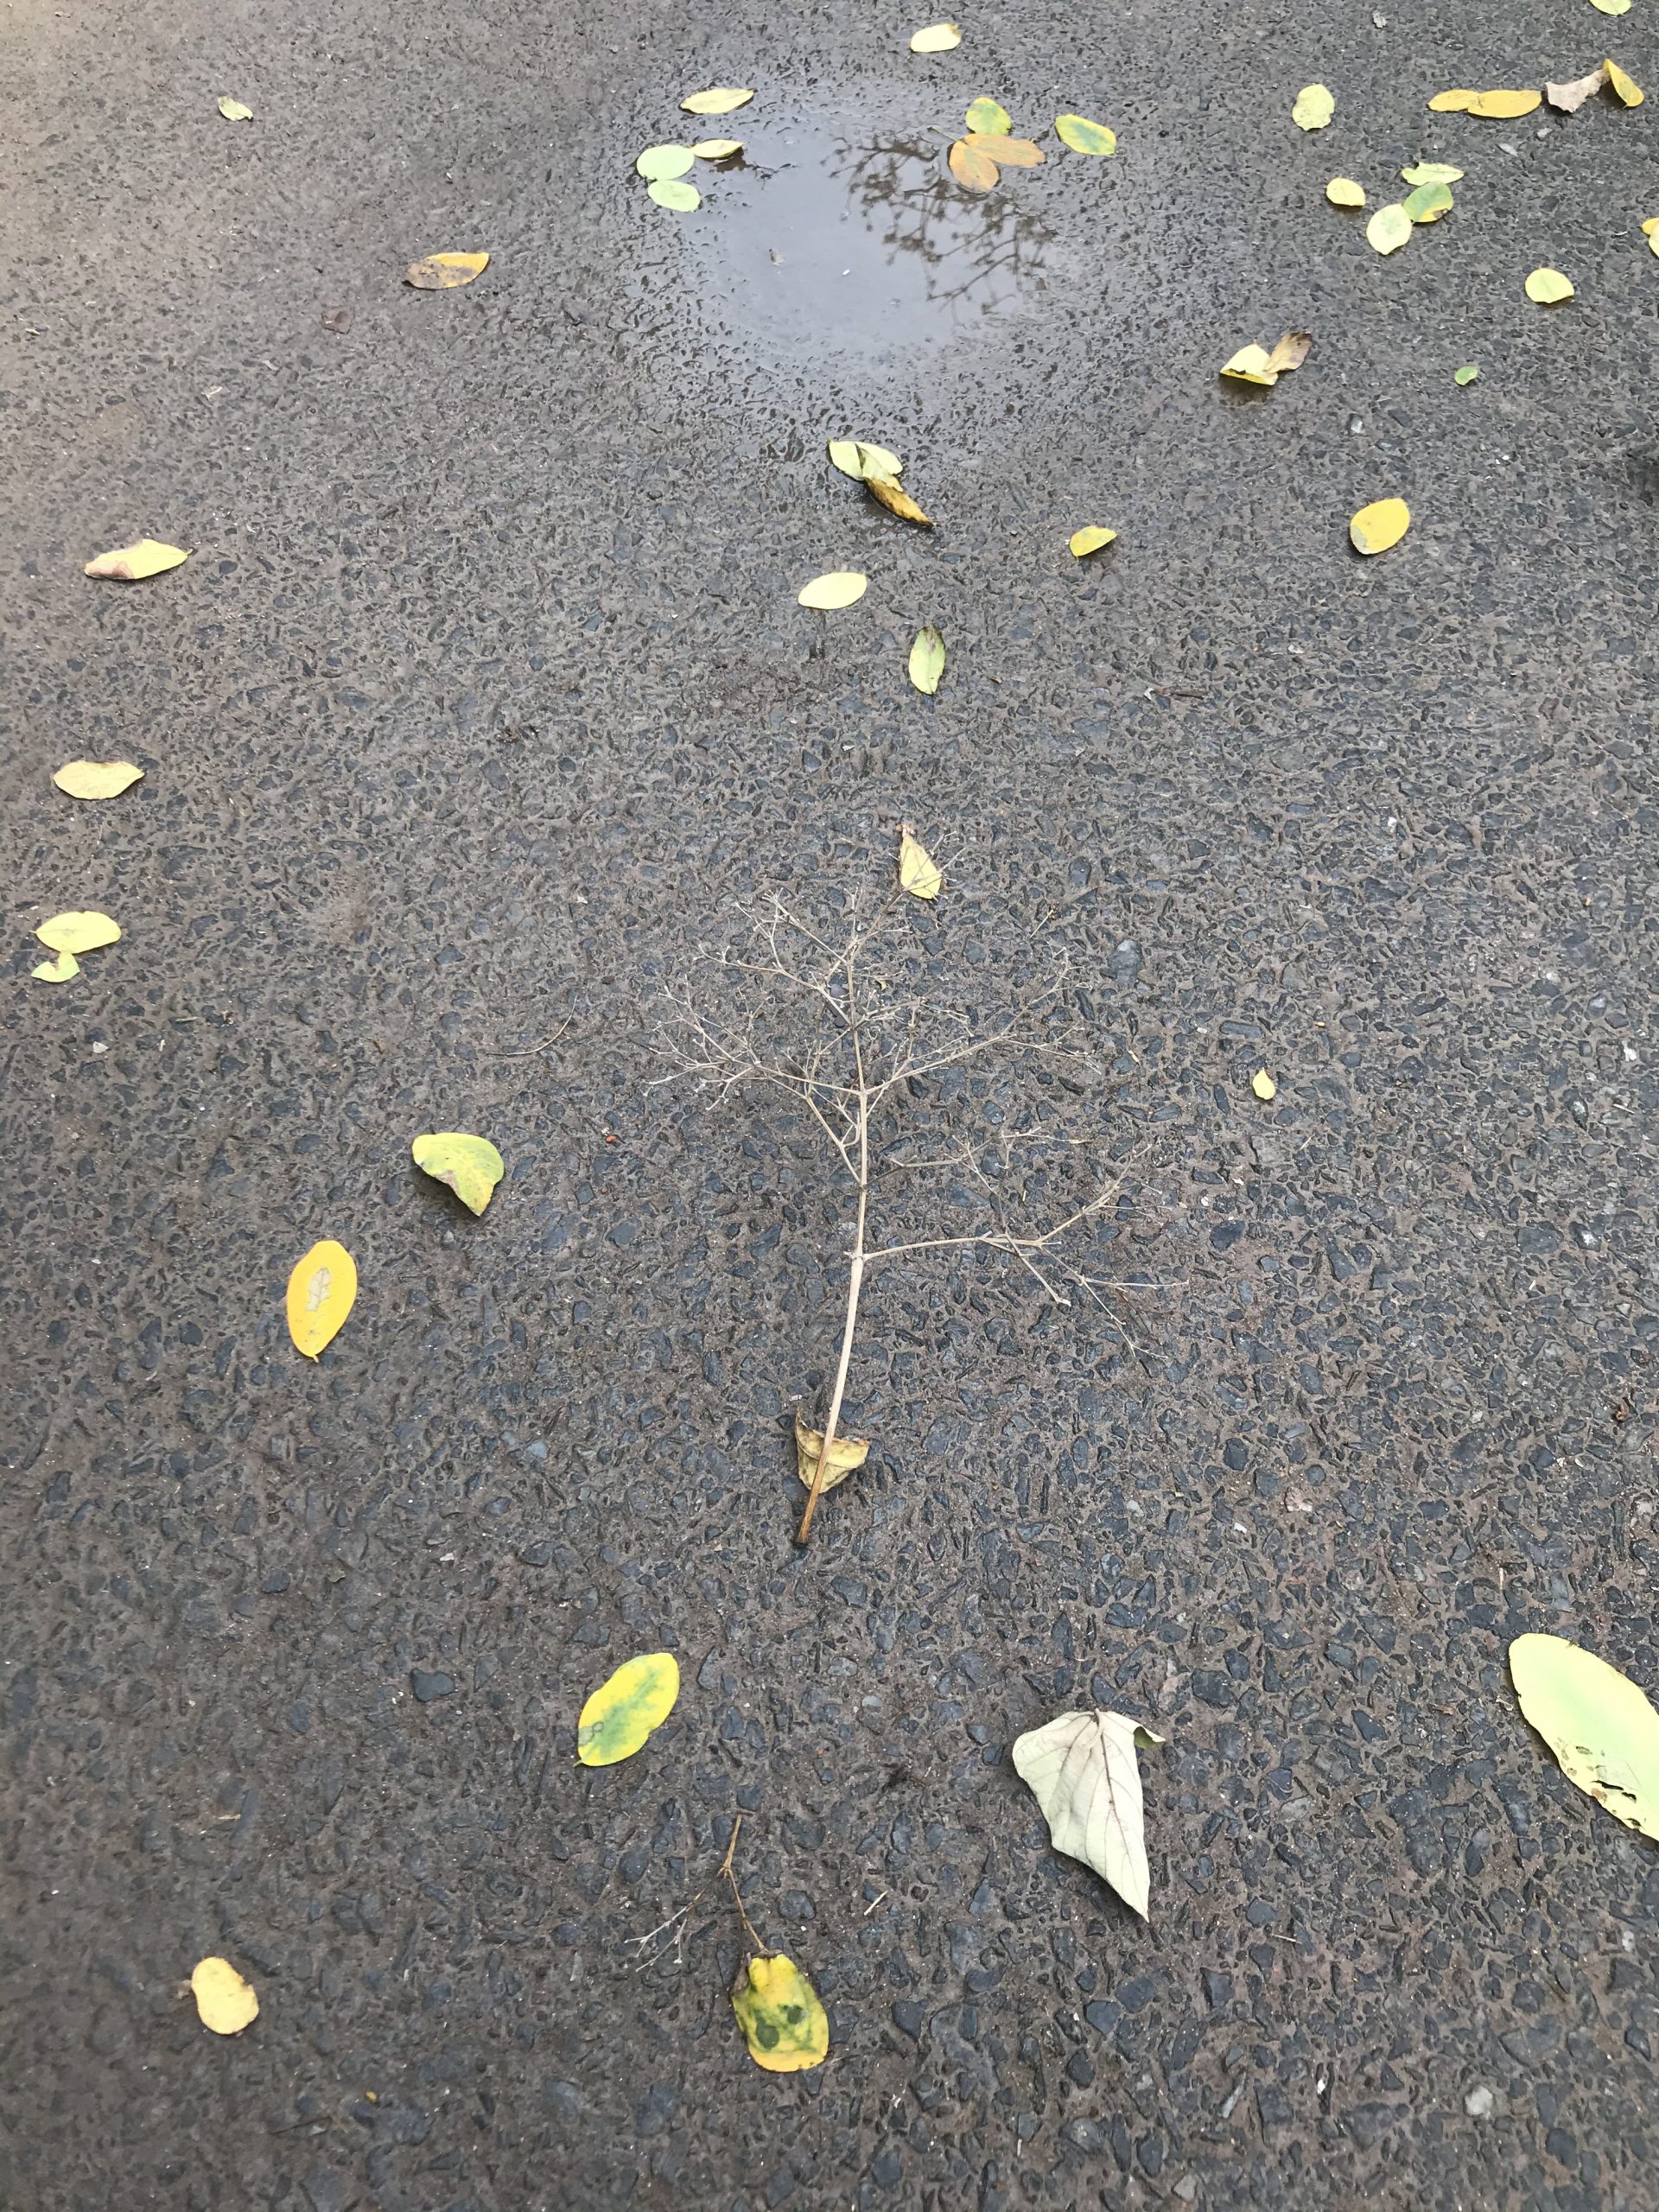 Dried twig on land